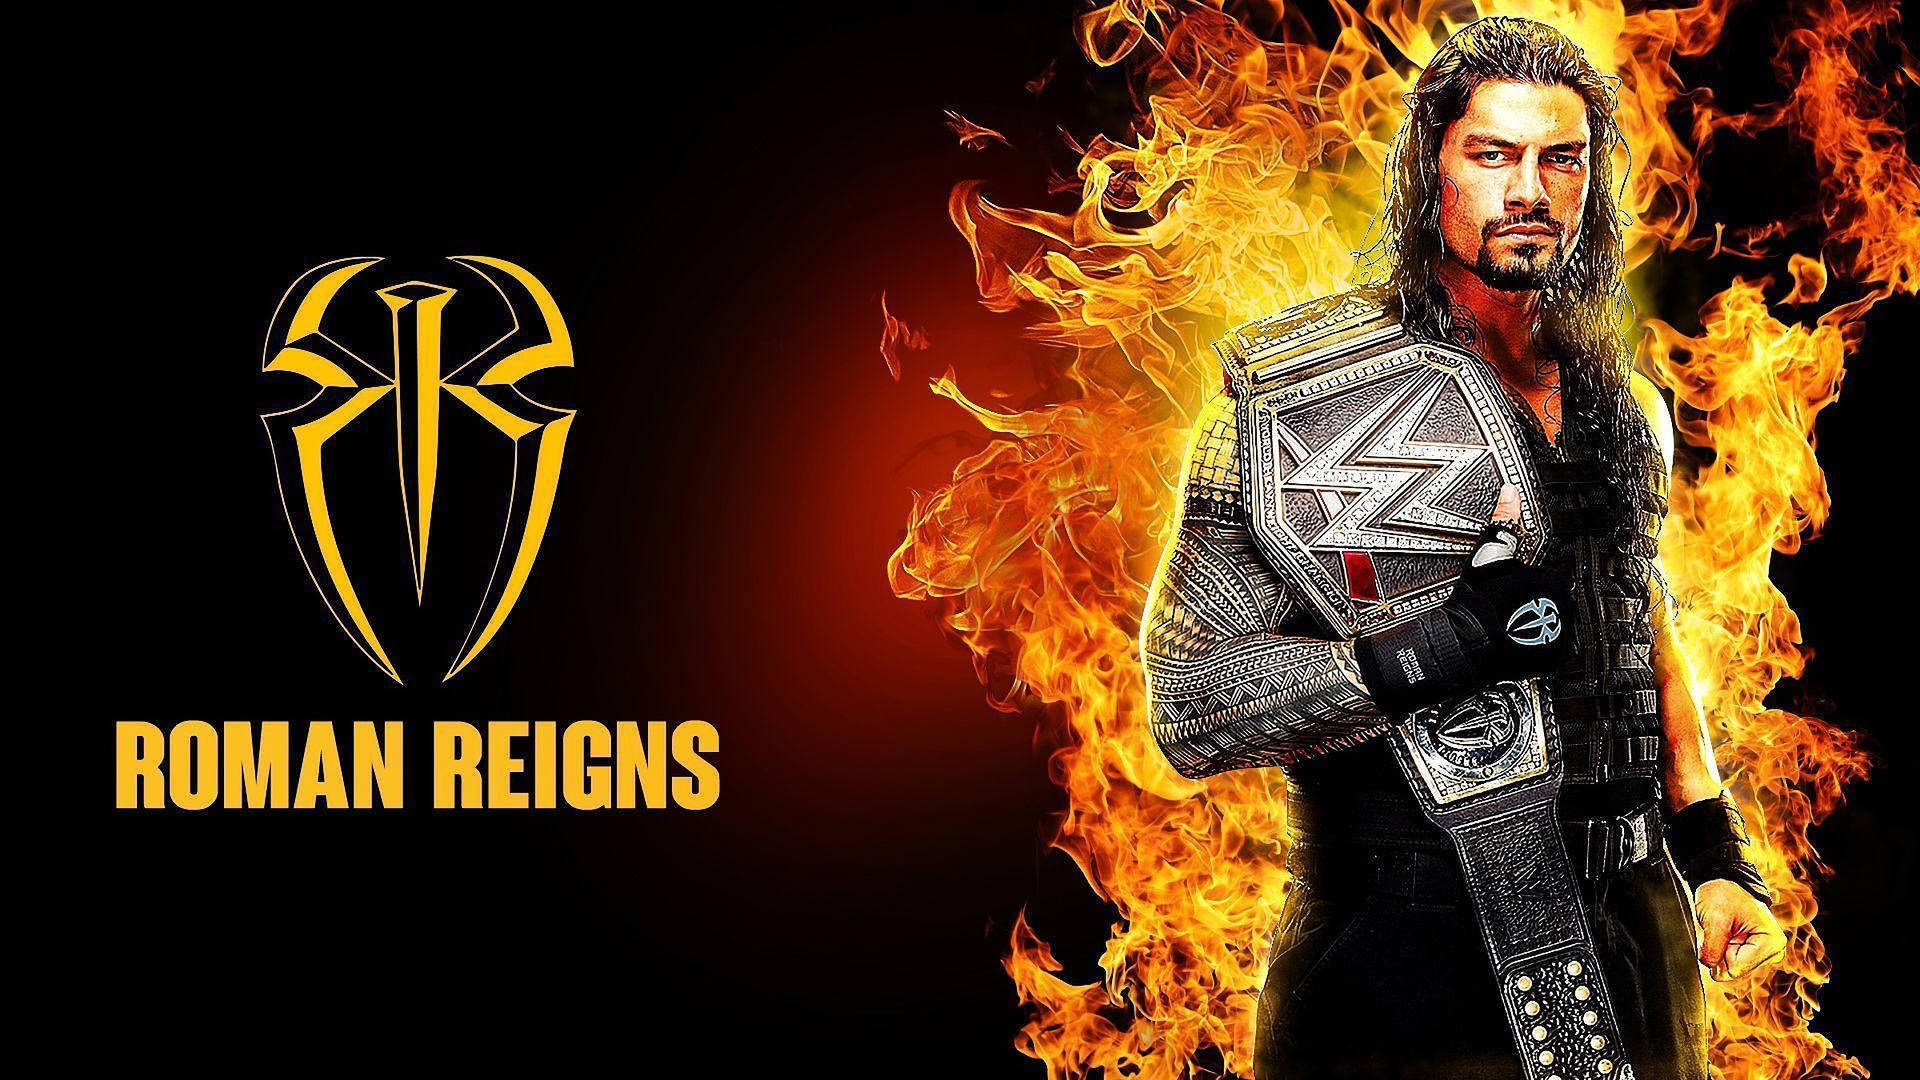 Wwe Nxt Superstar Roman Reigns Showcasing His Strength